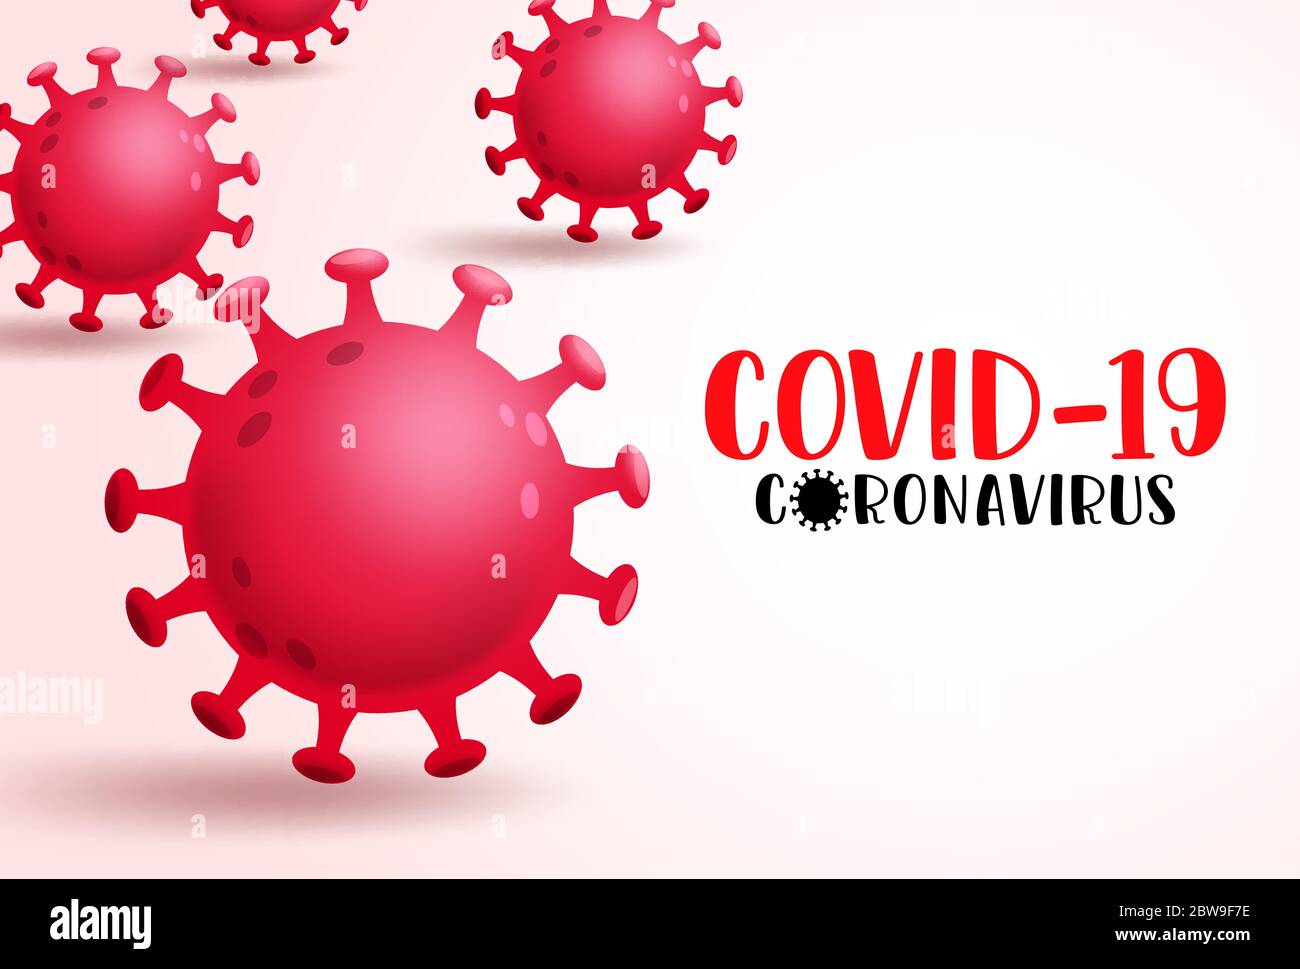 Corona Virus Covid-19 Vektorvorlage. Covid-19 Coronavirus Text im leeren Raum mit rotem Roman ncov globaler Pandemie-Ausbruch zur Krankheitsvorbeugung. Stock Vektor